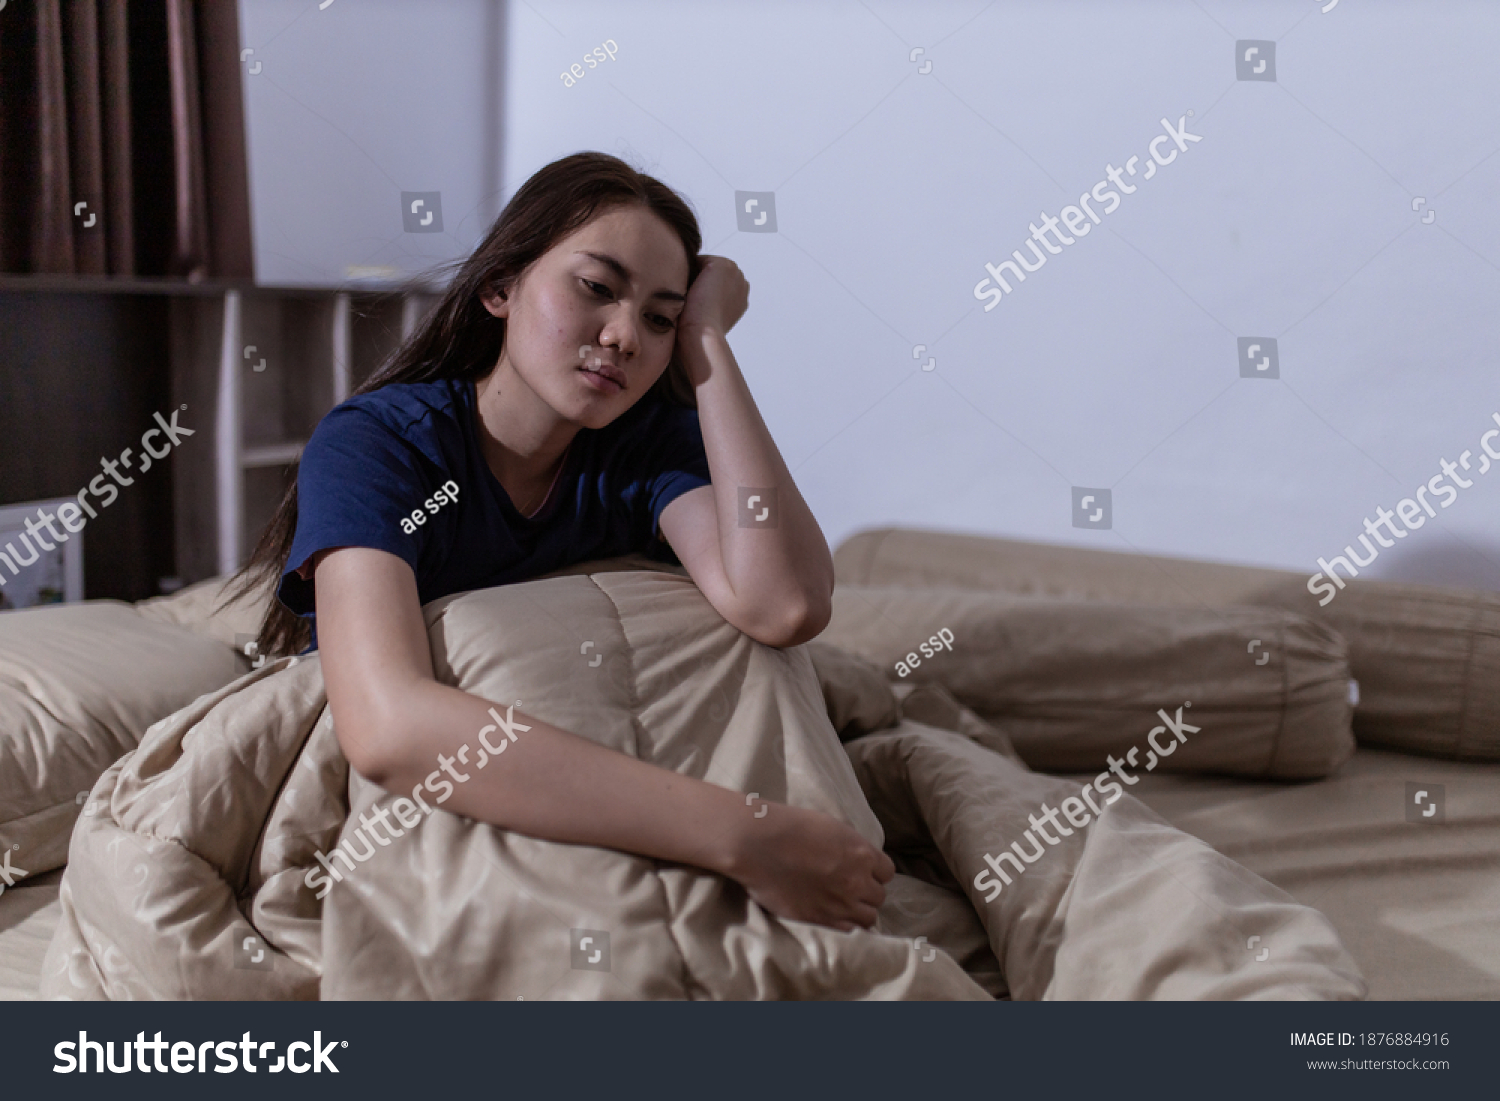 Young asian woman cannot sleep insomnia late at night. Can't sleep. Sleep apnea or stress. Sleep disorder concept. #1876884916